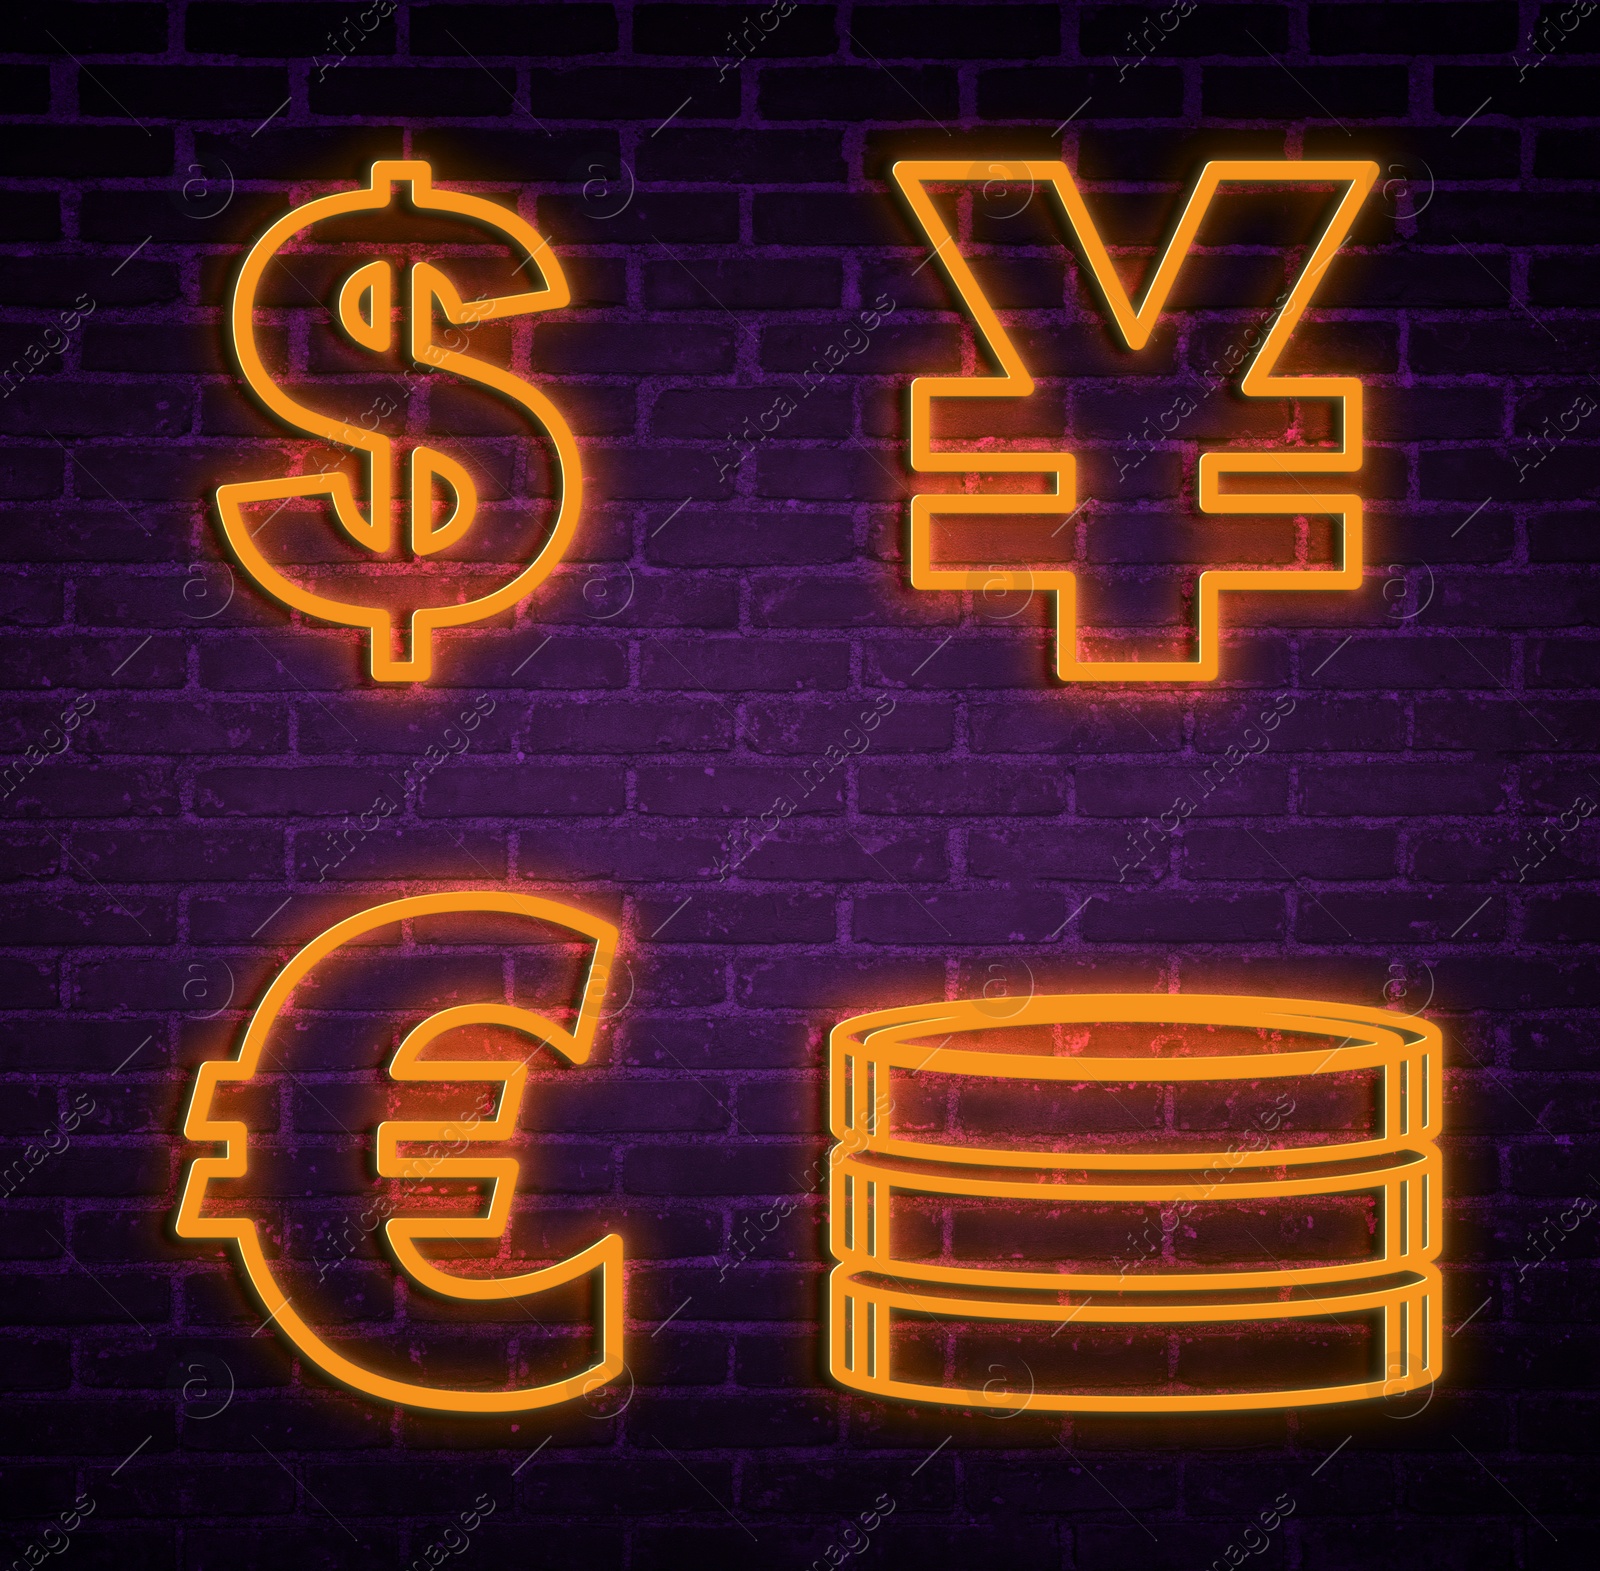 Image of Money exchange neon sign. Orange symbols of different currencies on brick wall